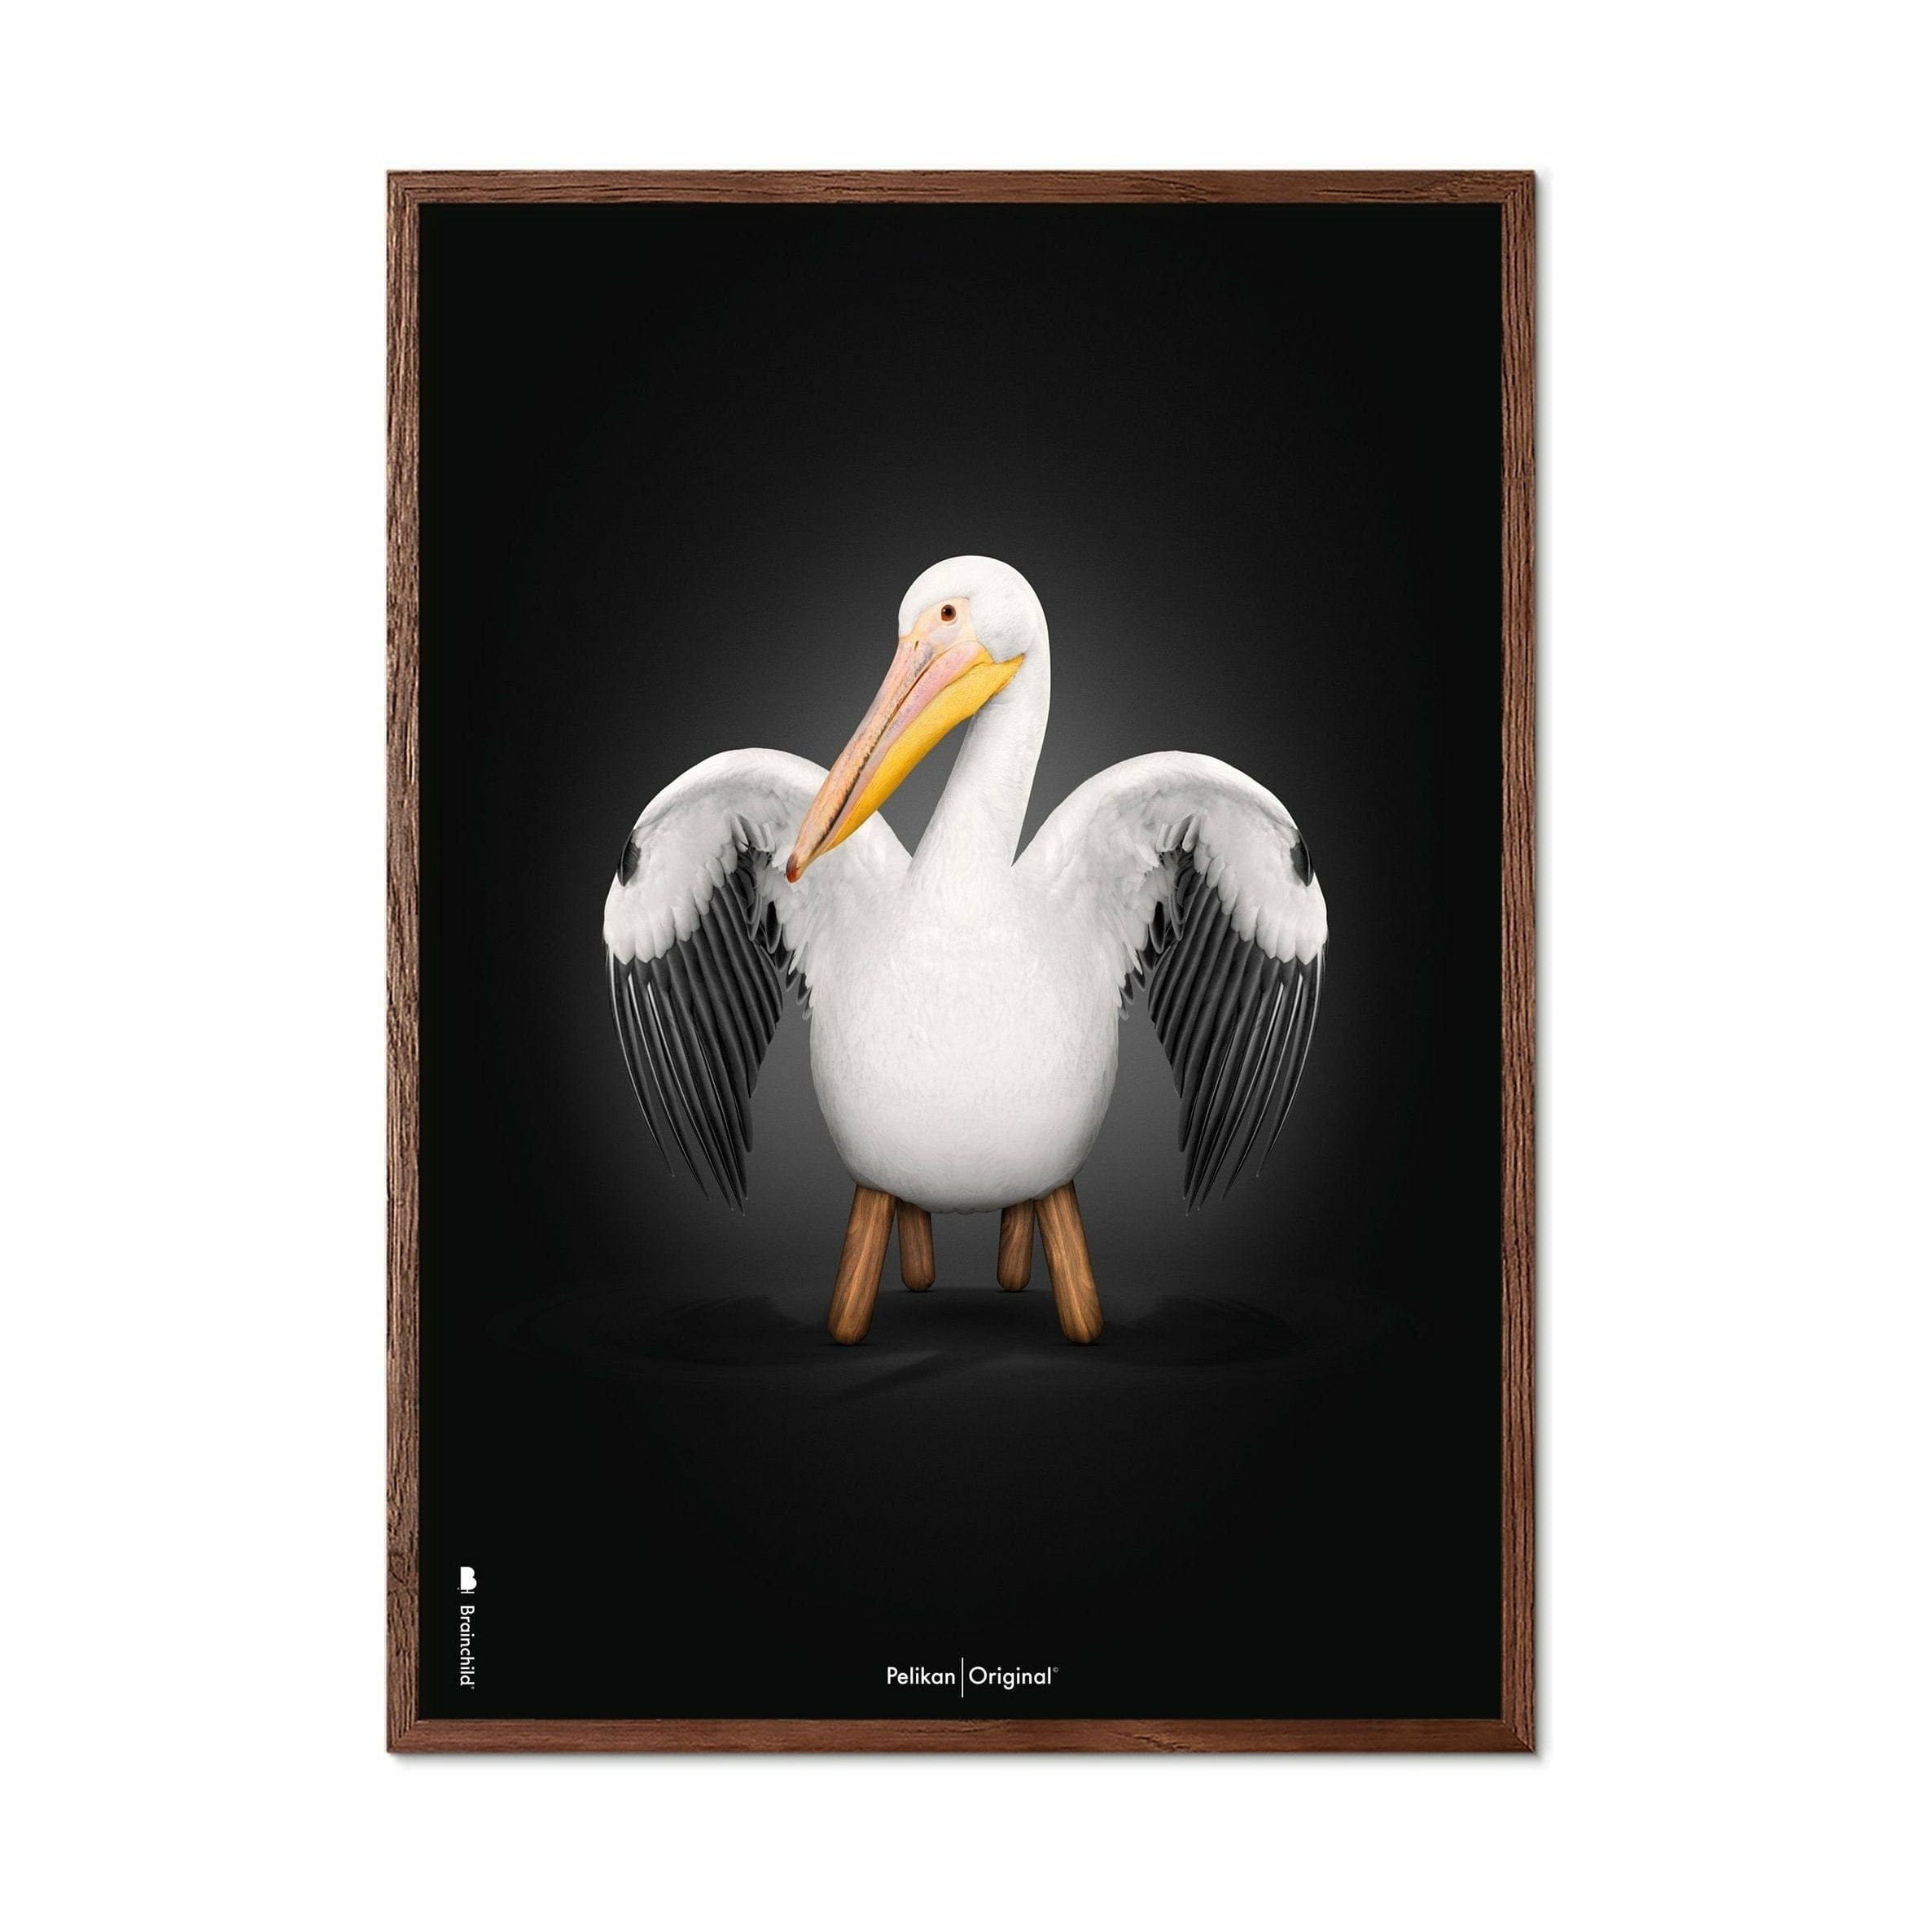 Brainchild Pelikan Klassisk Plakat, Ramme I Mørkt Træ 50X70 Cm, Sort Baggrund